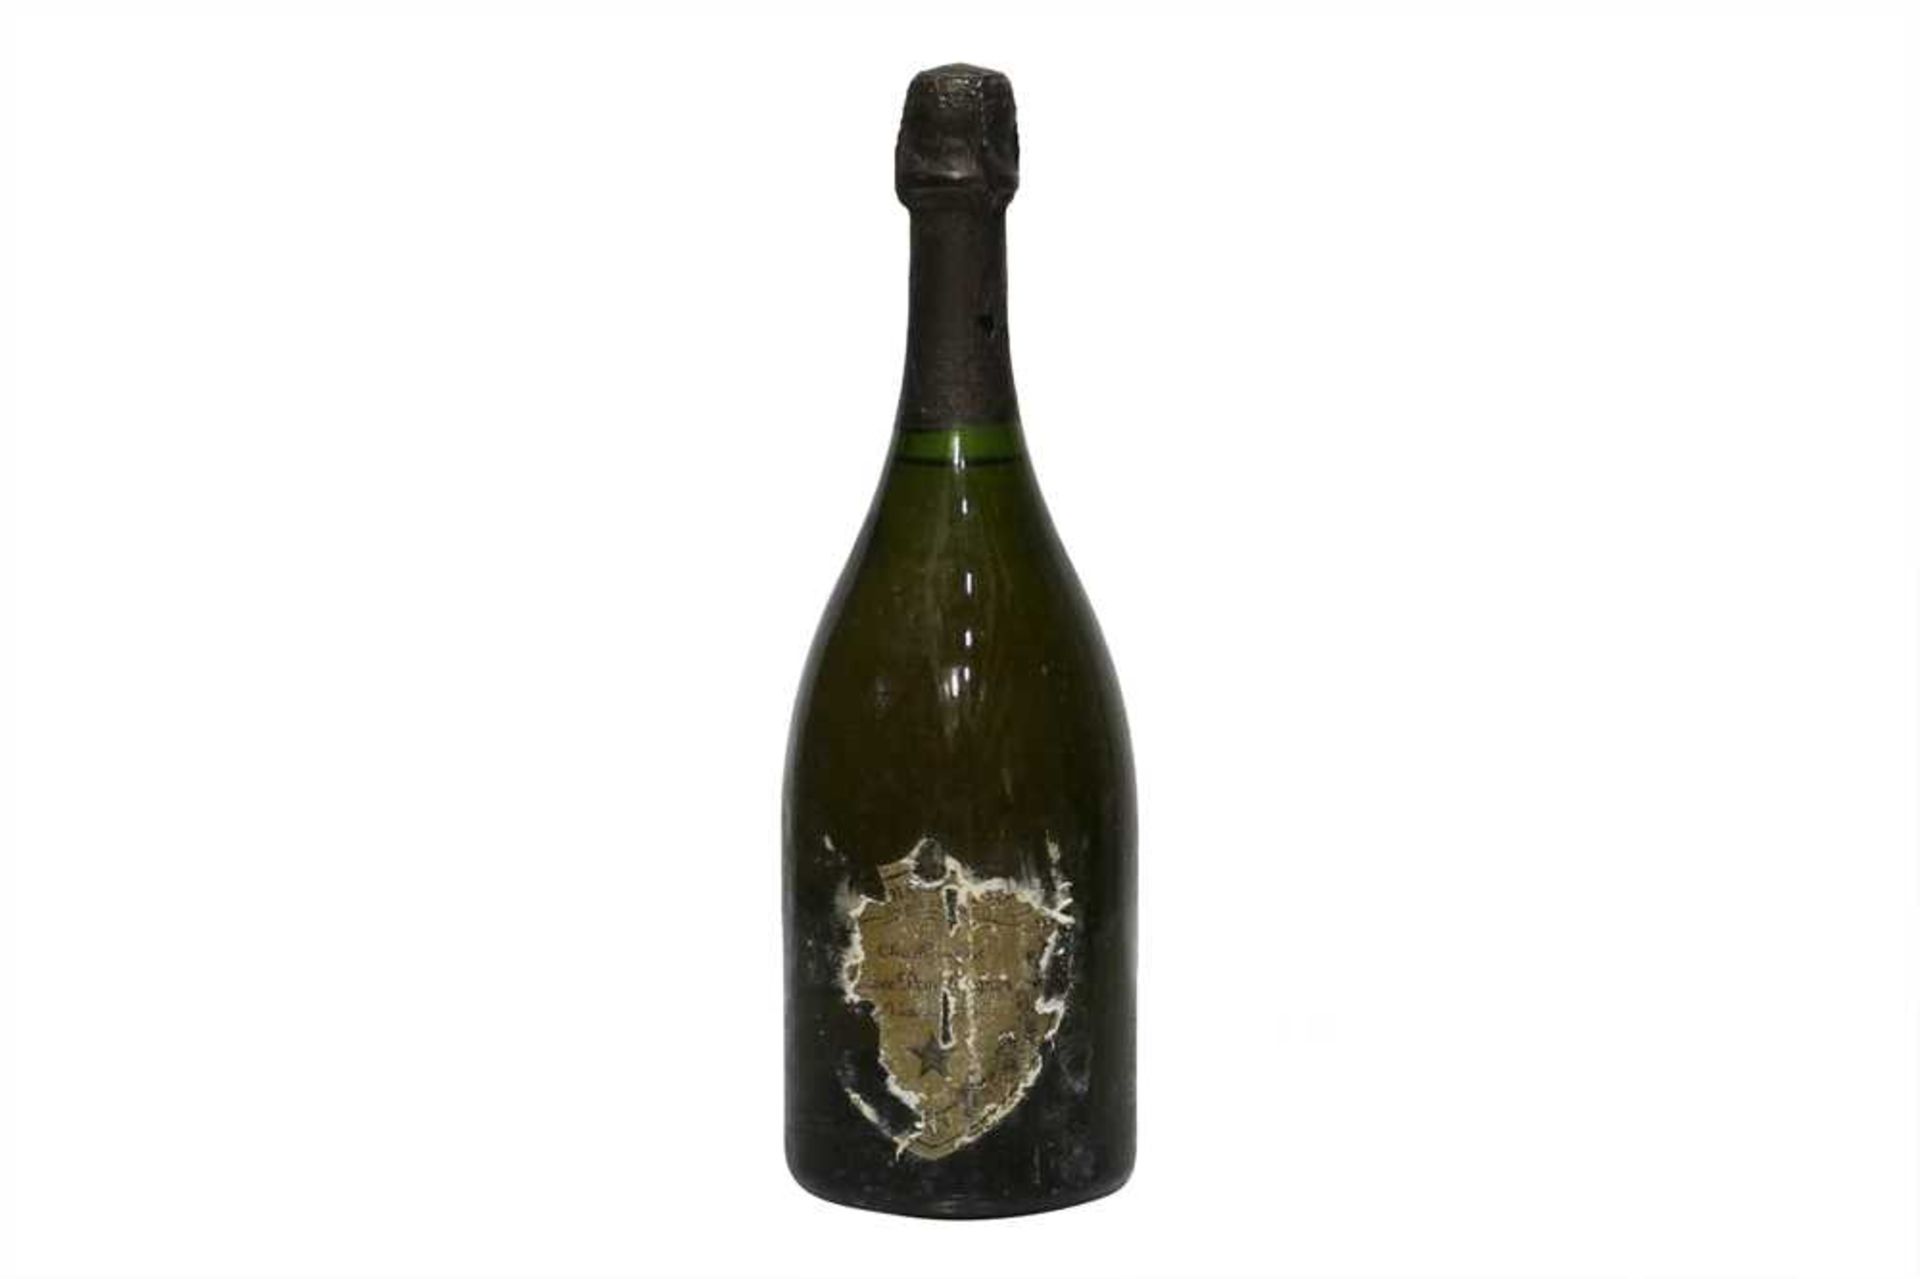 Dom Perignon, Epernay, label damage, possibly 1976 vintage, one bottle